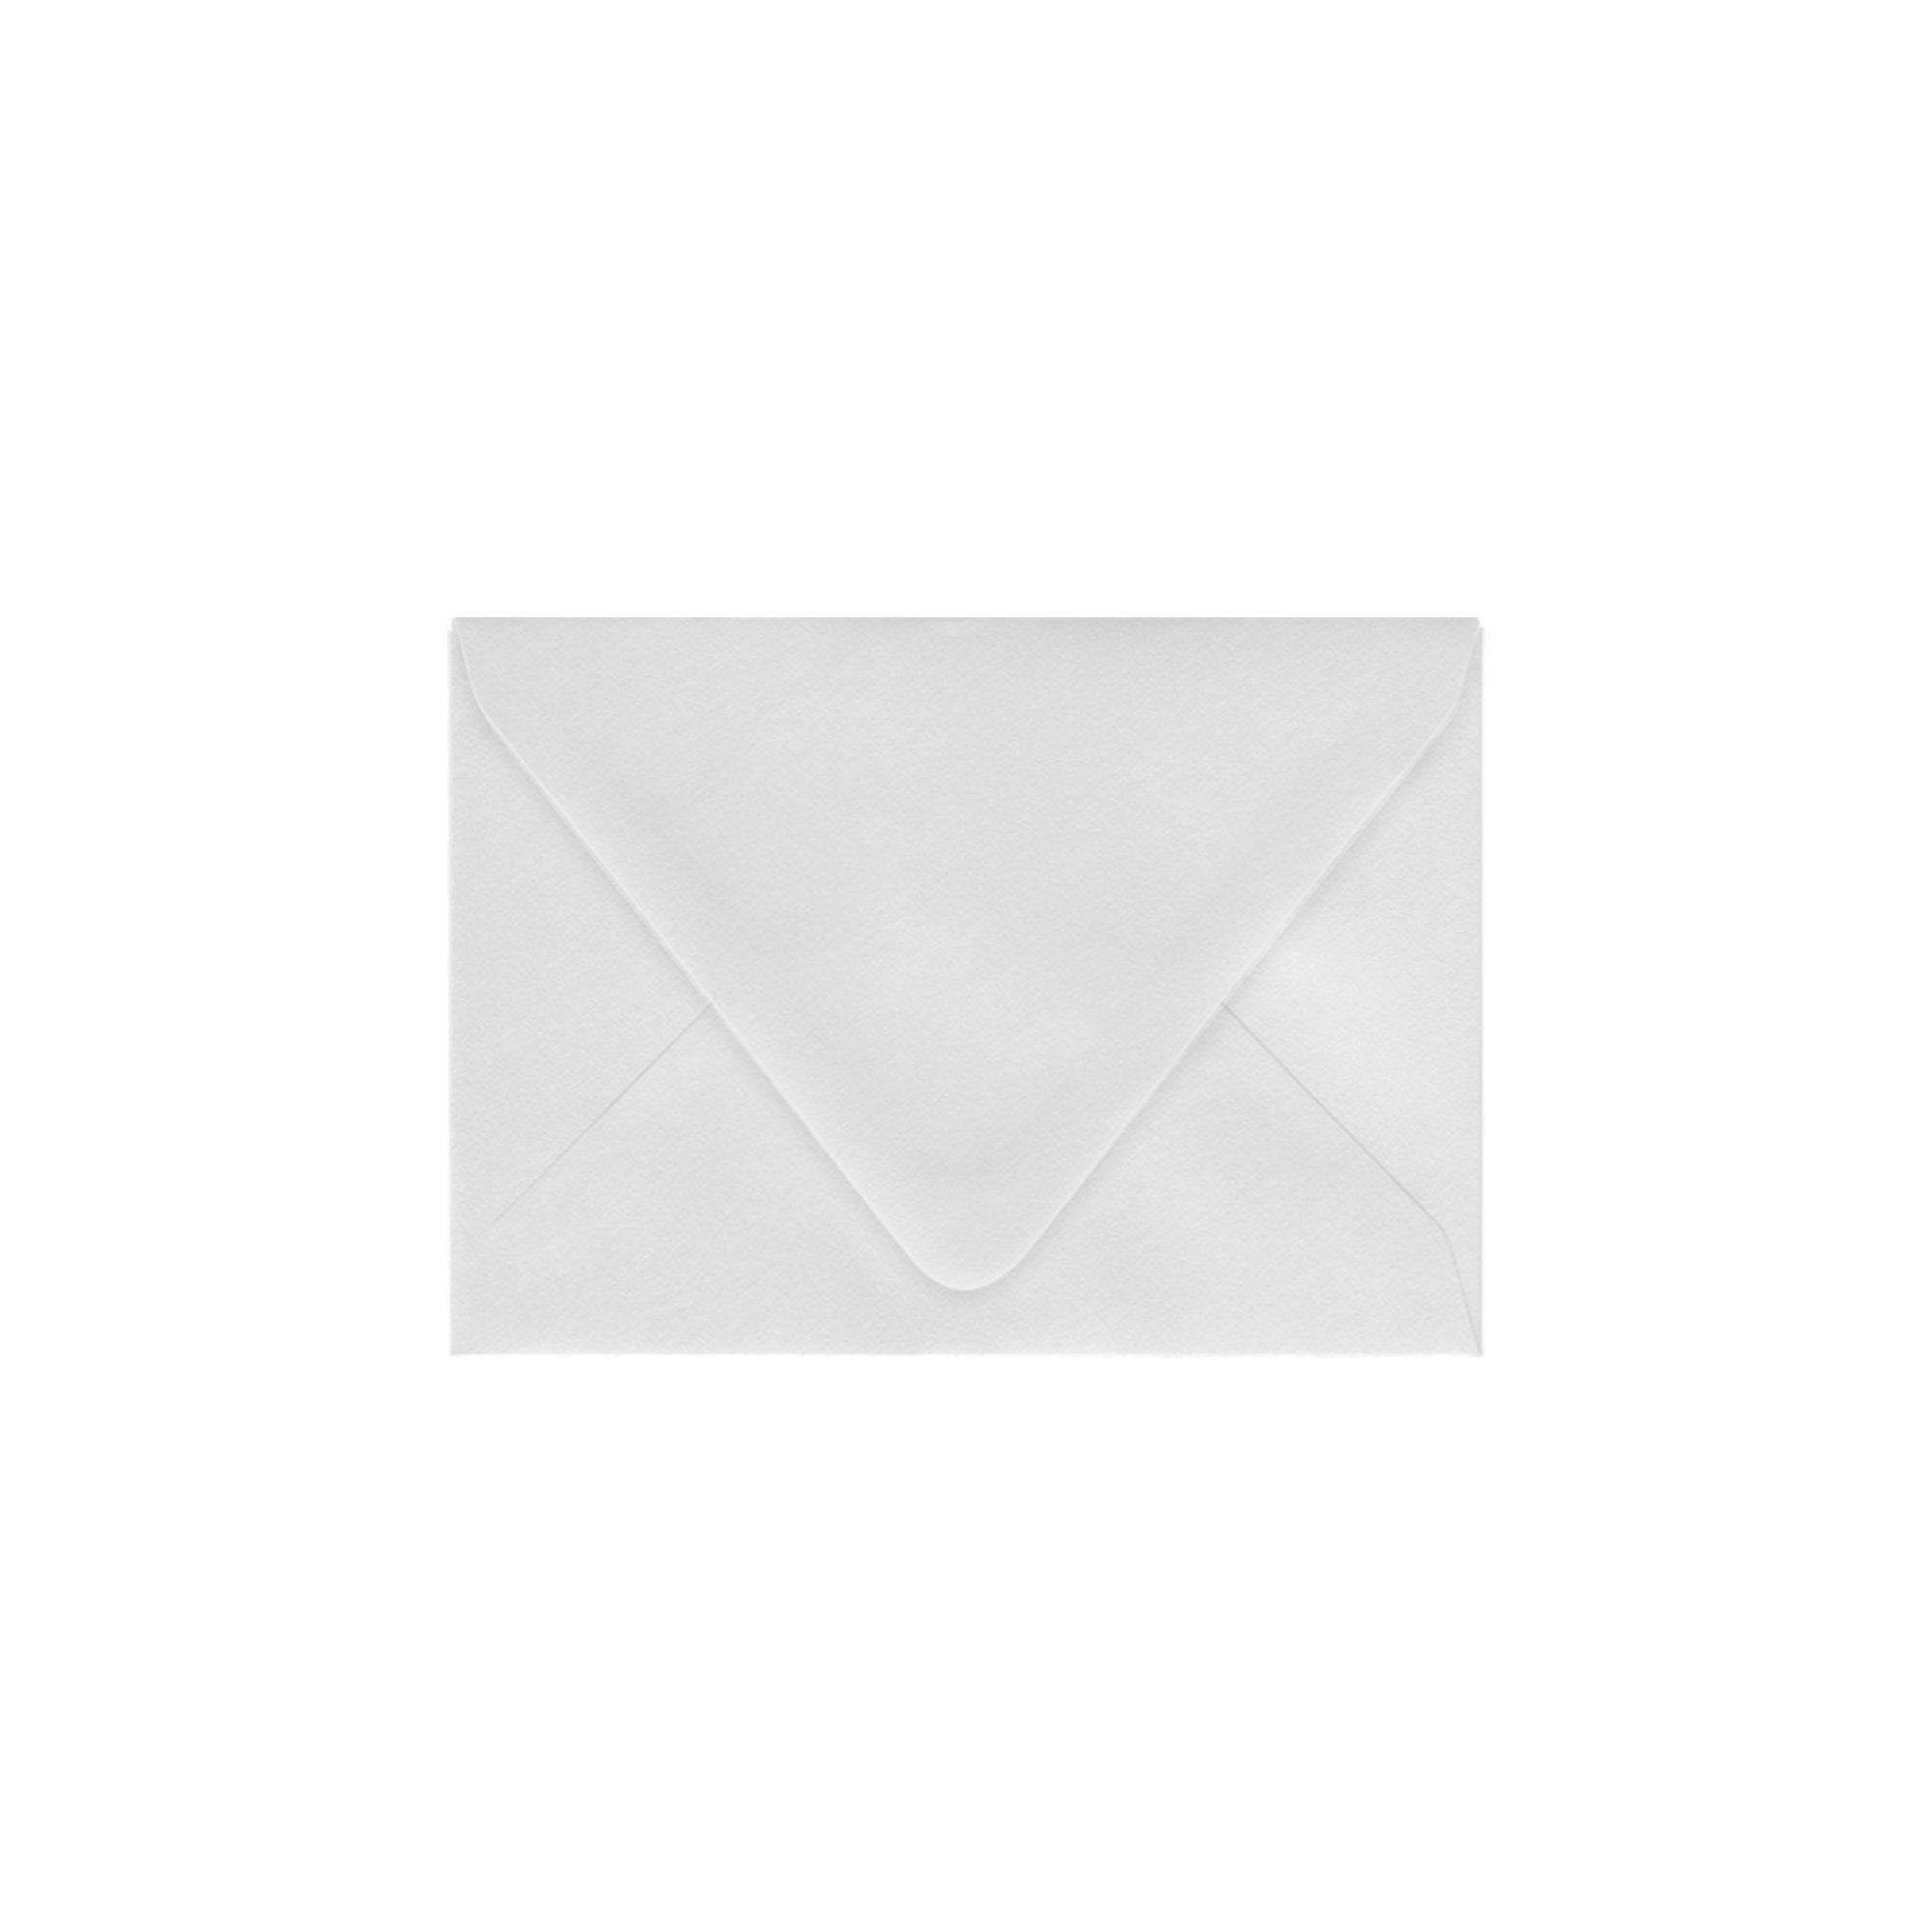 A1 Envelopes